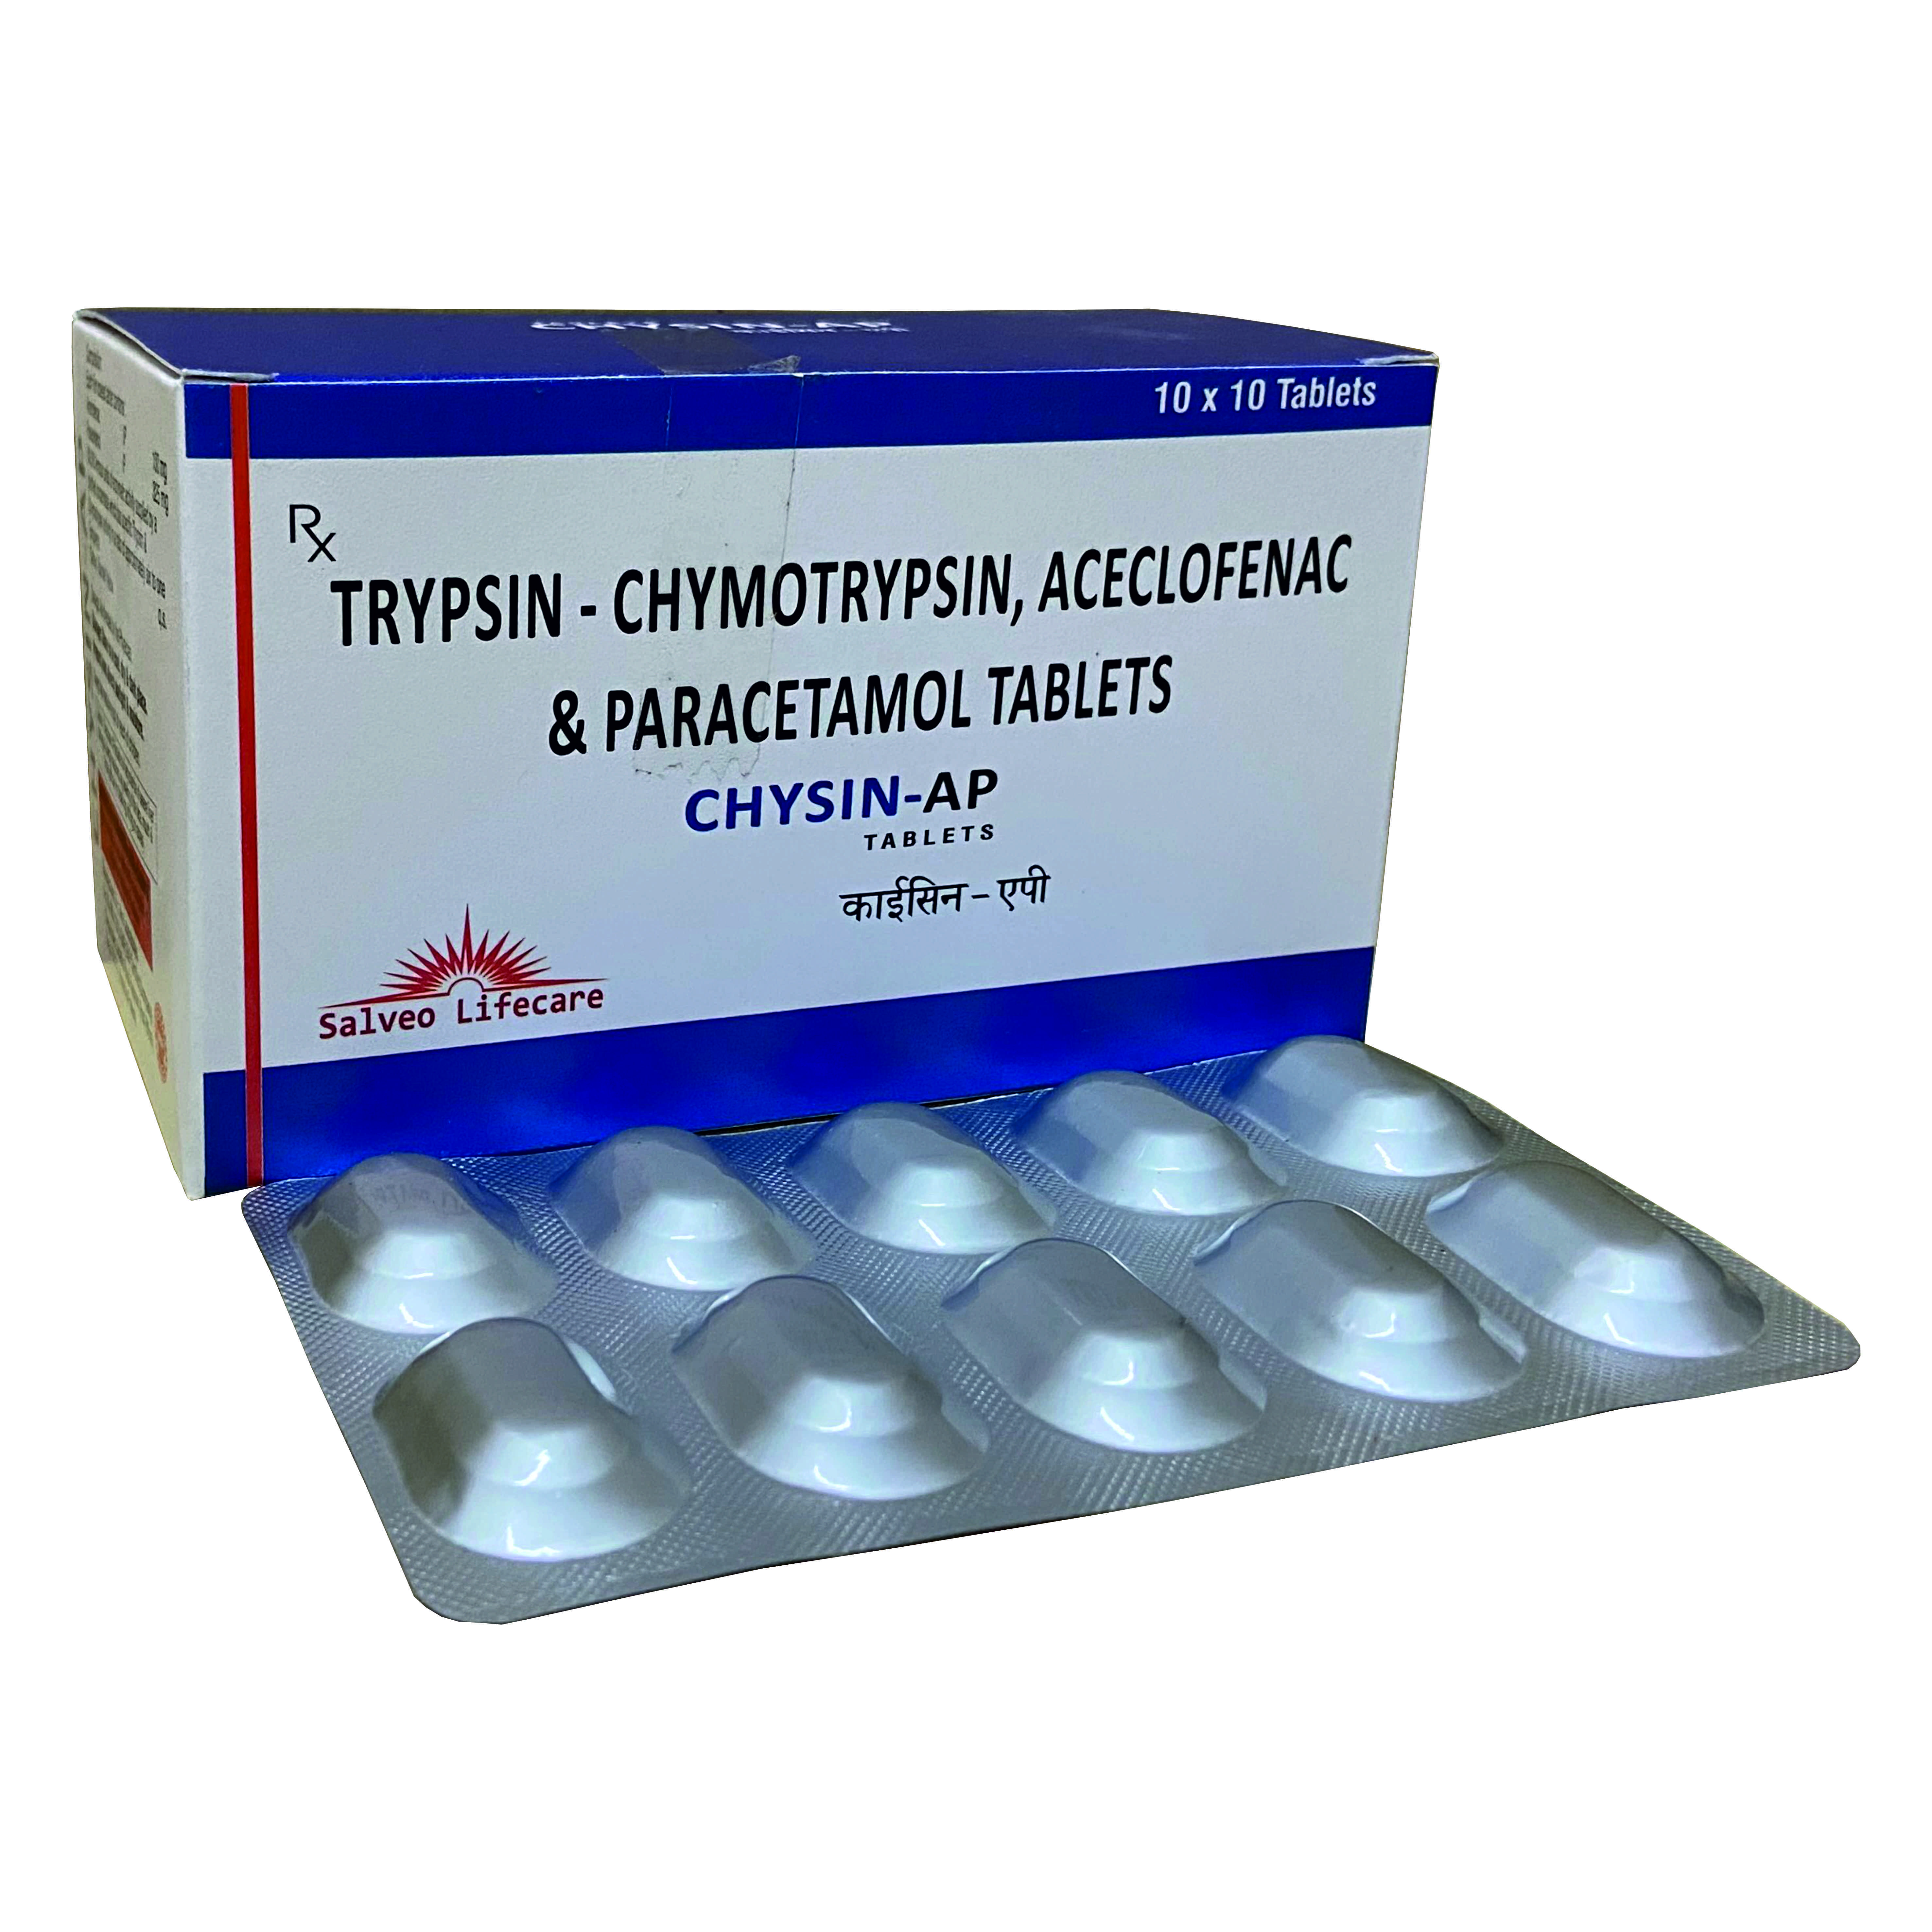 trypsin, chymotrypsin 50,000,aceclofenac 100mg,
paracetamol 325 mg